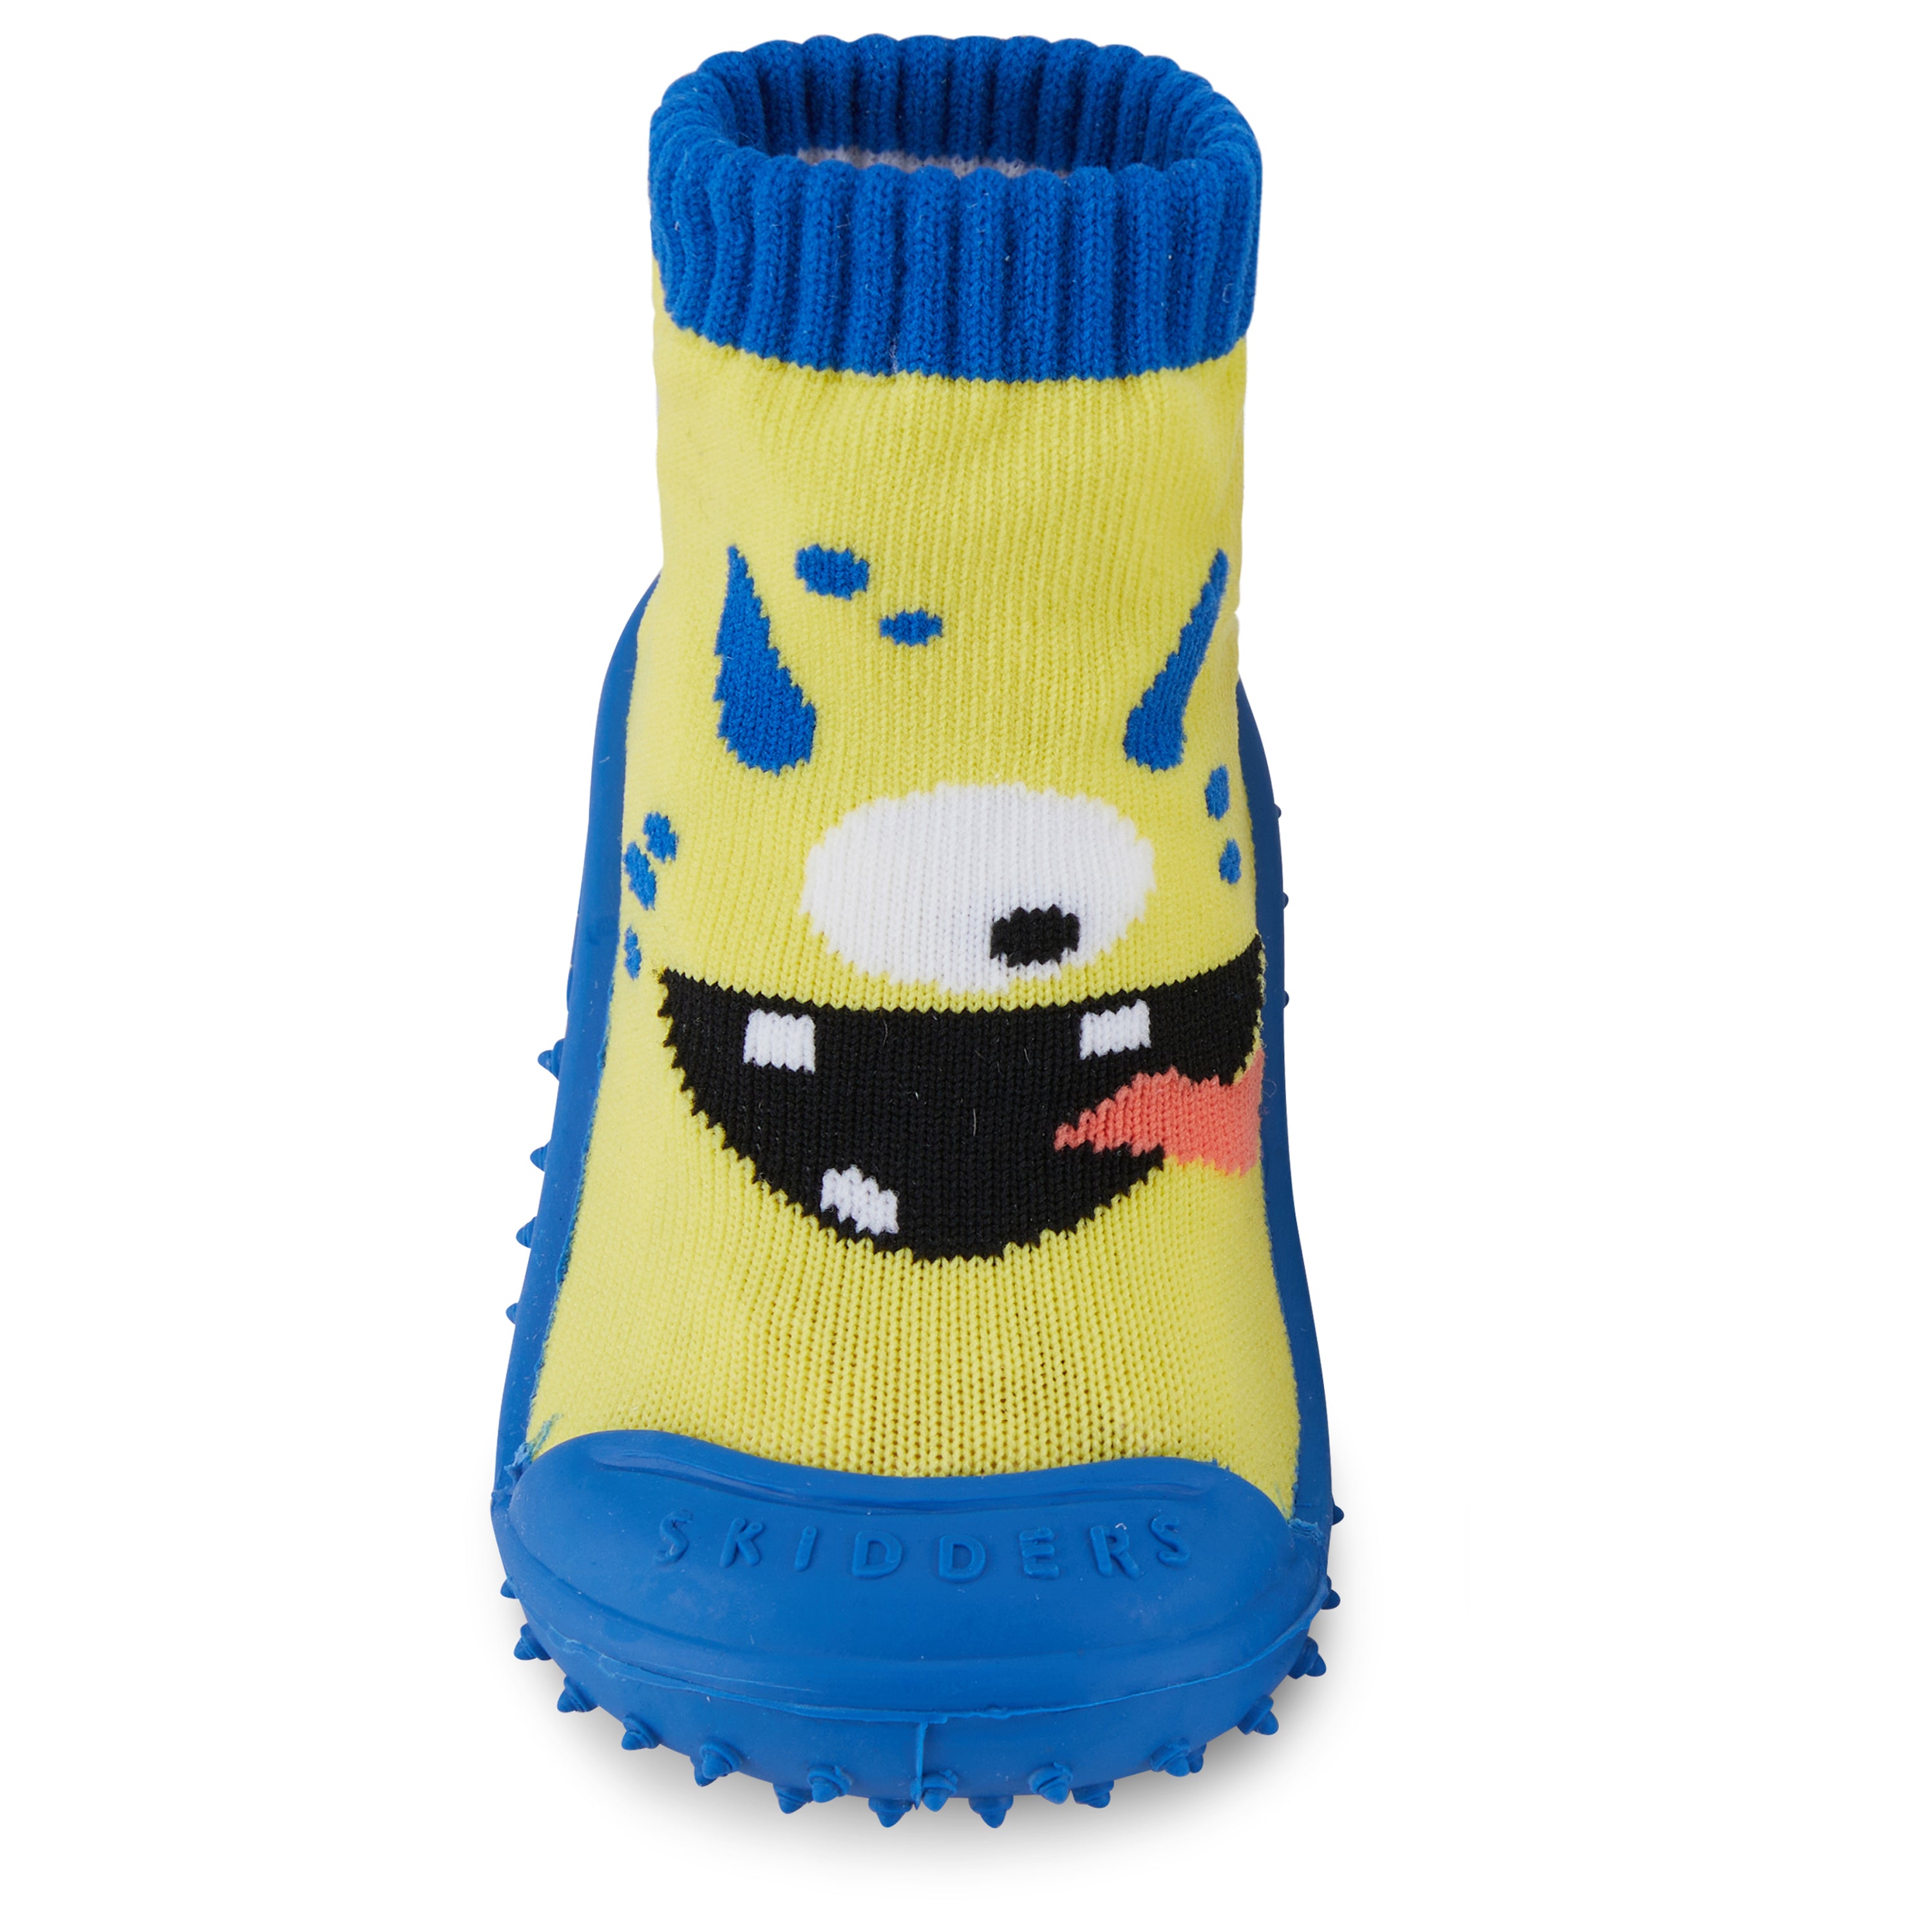 SpongeBob Squarepants Boys Wellies | Kids Yellow Rain Wellington Boots |  Patrick Star Toddlers Water Resistant Walking Shoes